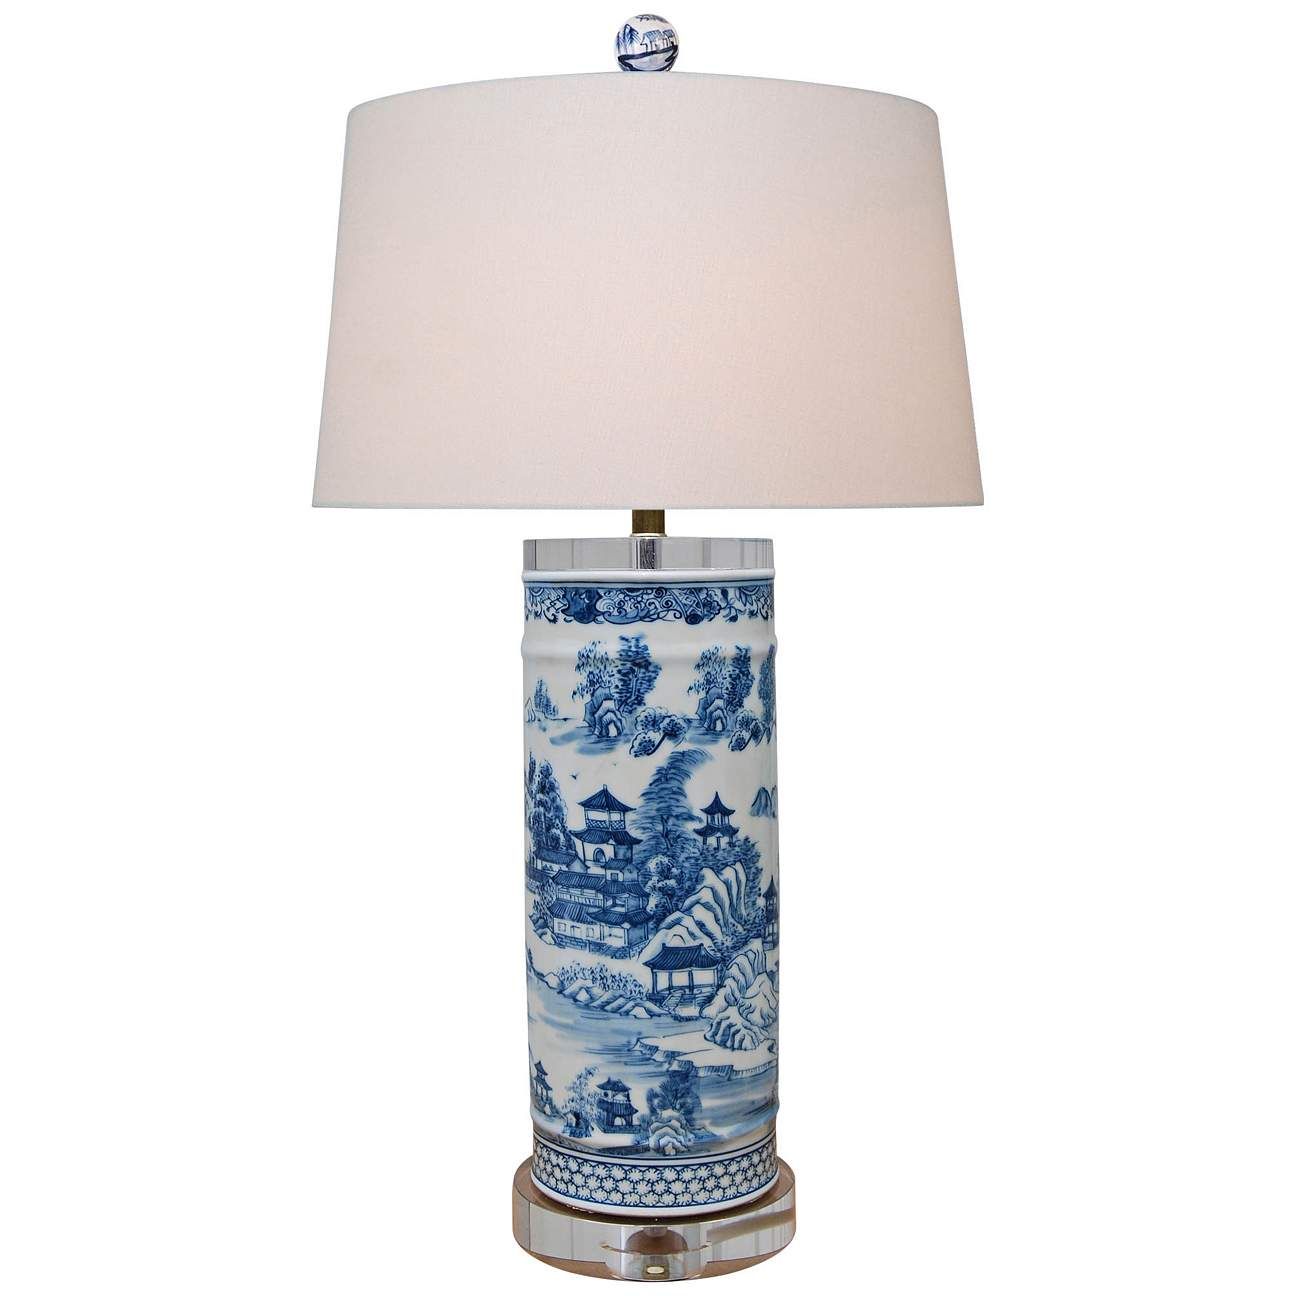 Harold Blue and White Chinoiserie Vase Table Lamp | LampsPlus.com